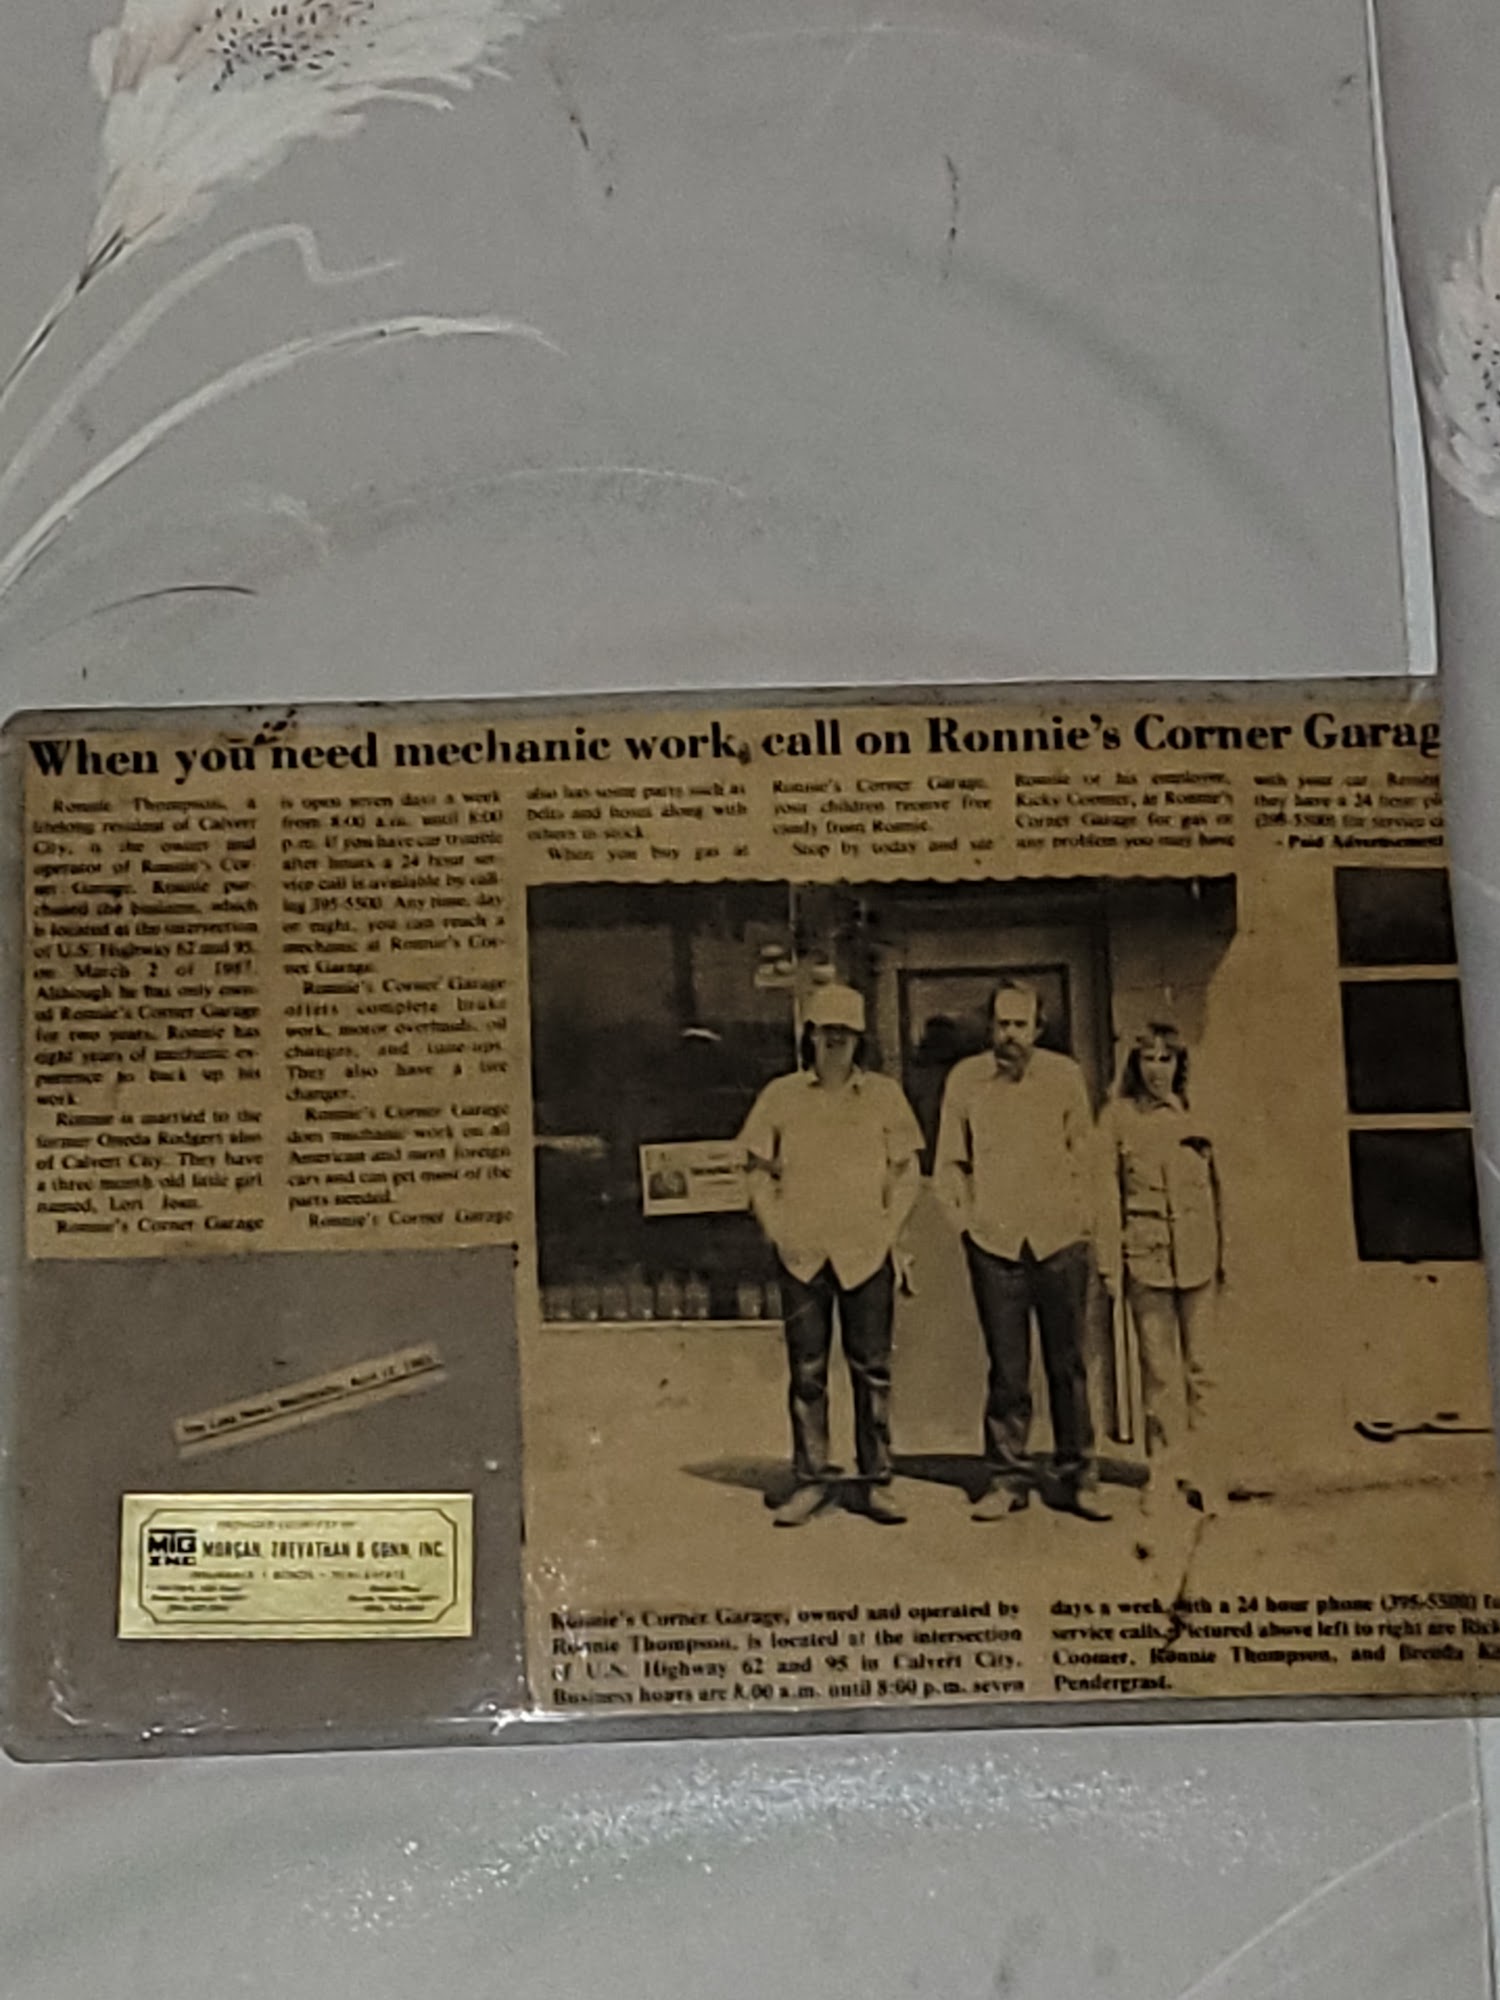 Ronnie's Corner Garage 21 2nd Ave SE, Calvert City Kentucky 42029